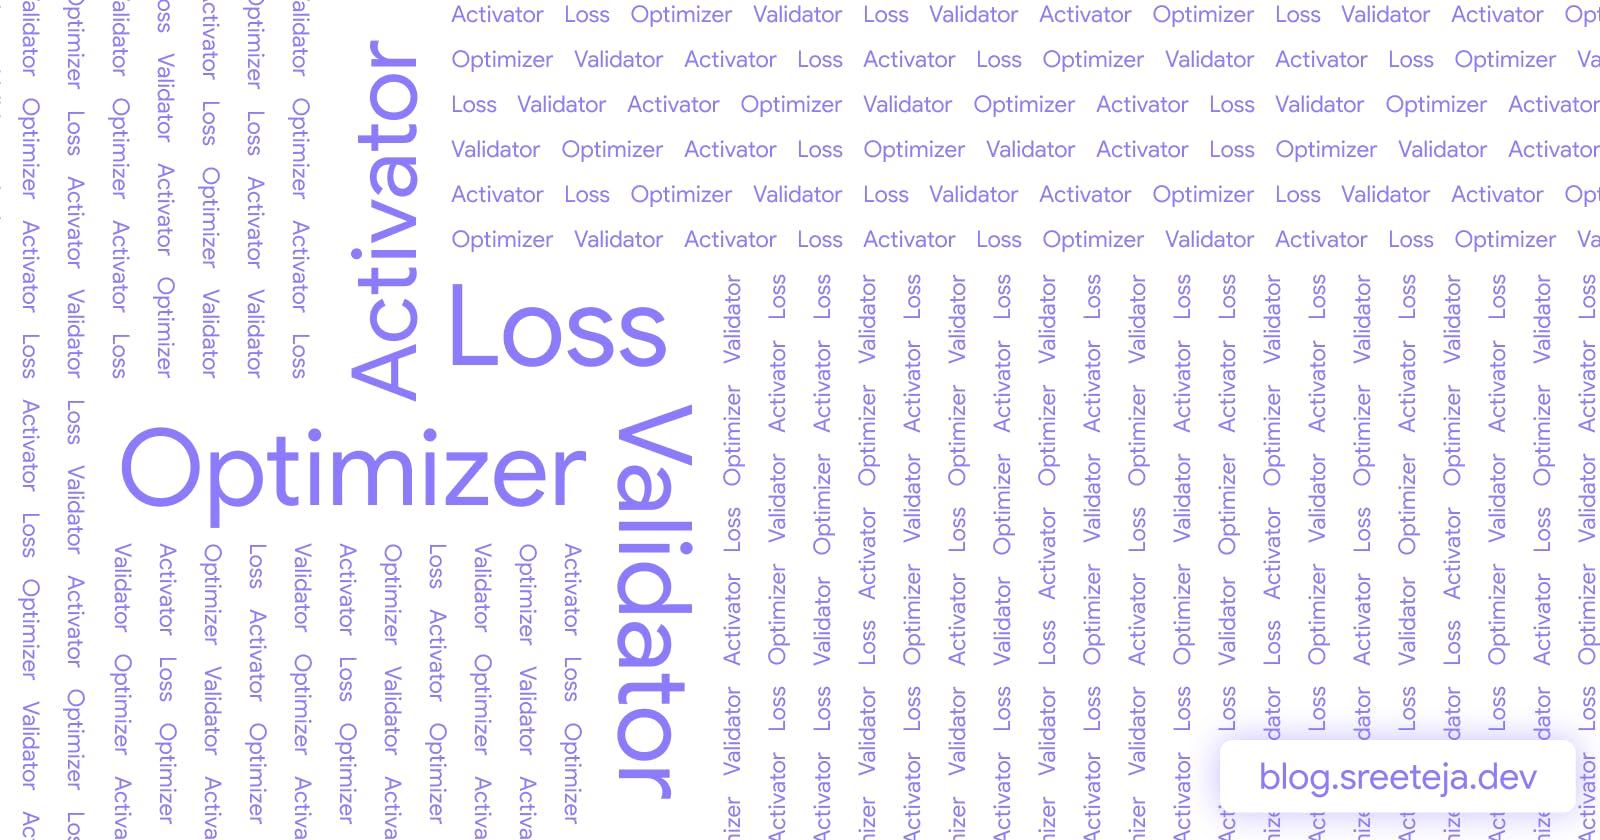 Loss, Validator, Optimizer & Activator